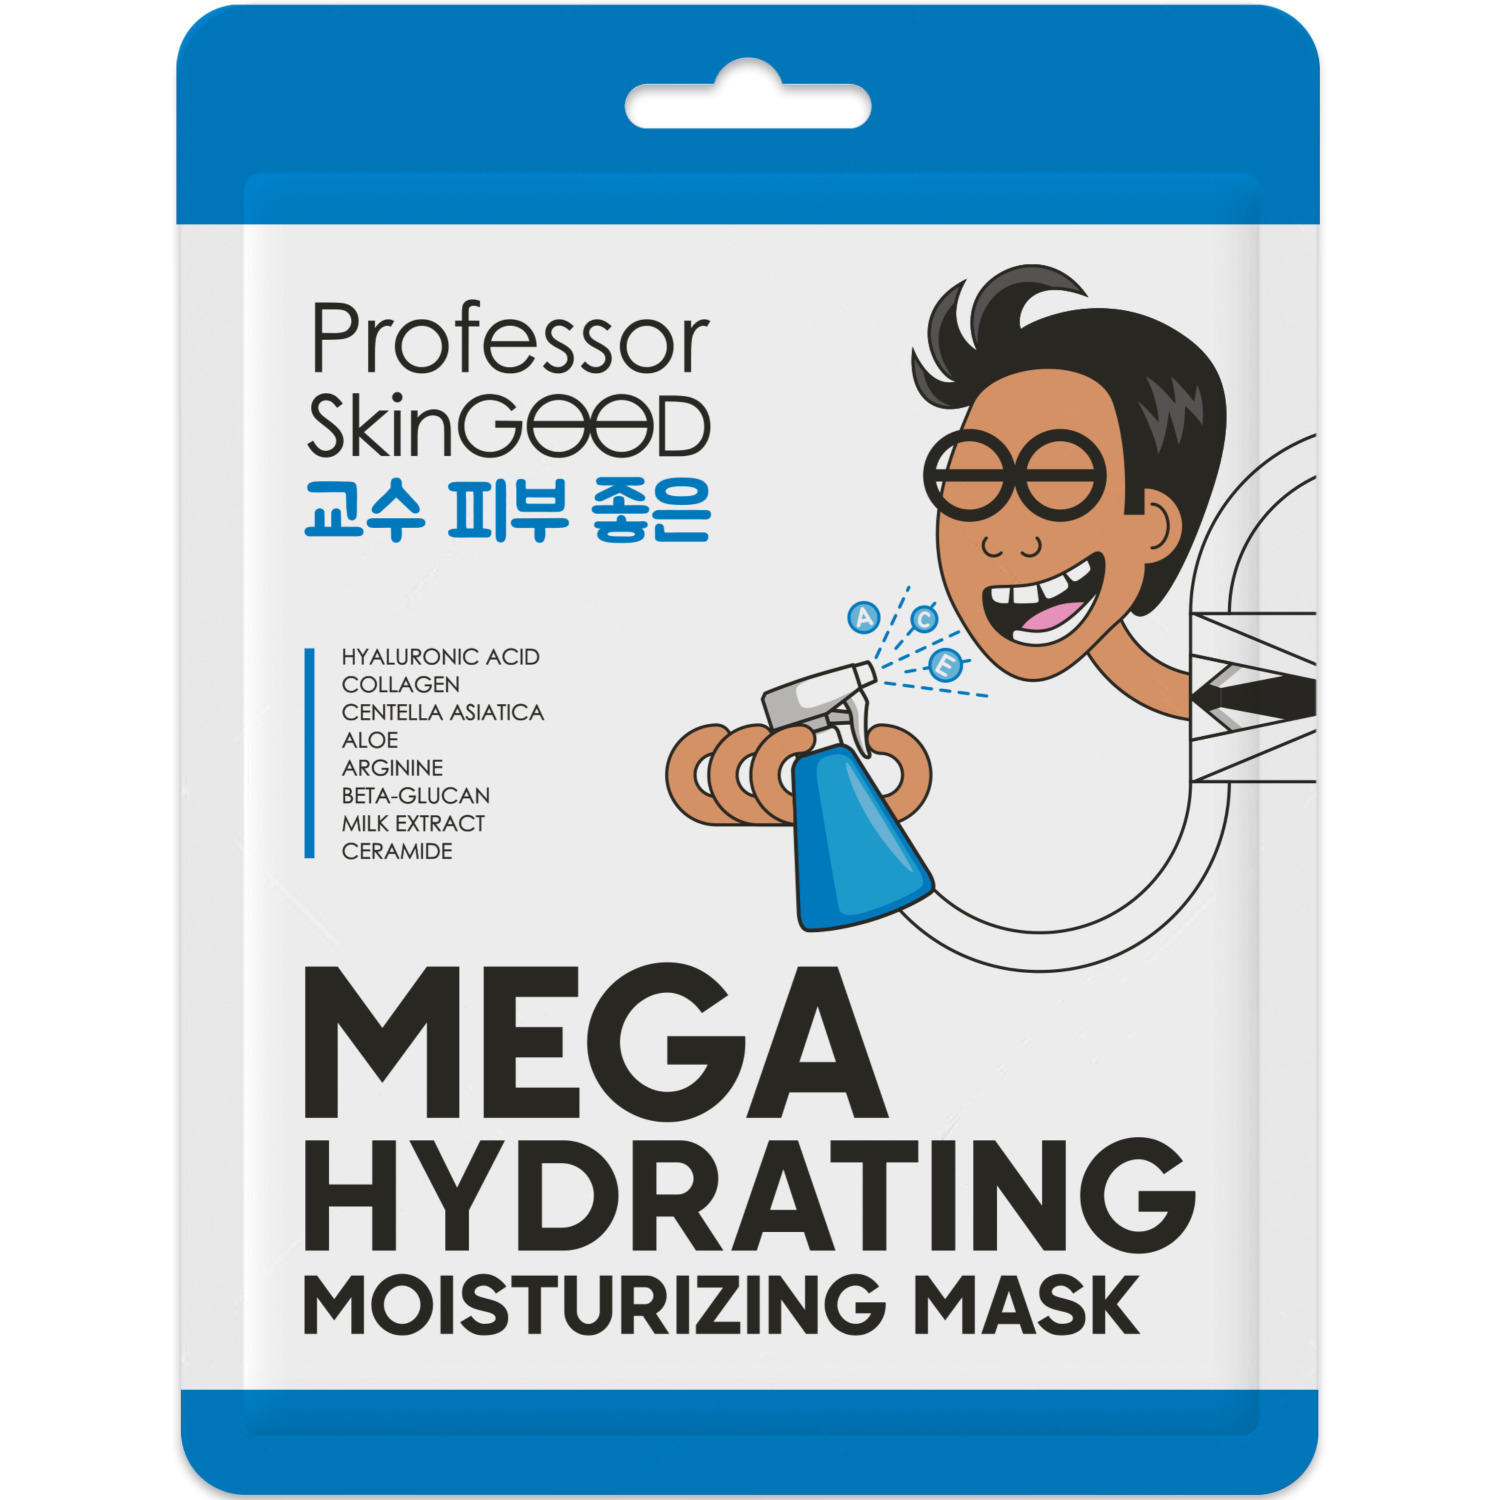 Professor SkinGOOD Увлажняющая маска Mega Hydrating Moisturizing Mask, 25 г (Professor SkinGOOD, Маски) professor skingood hemp extract antistress mask